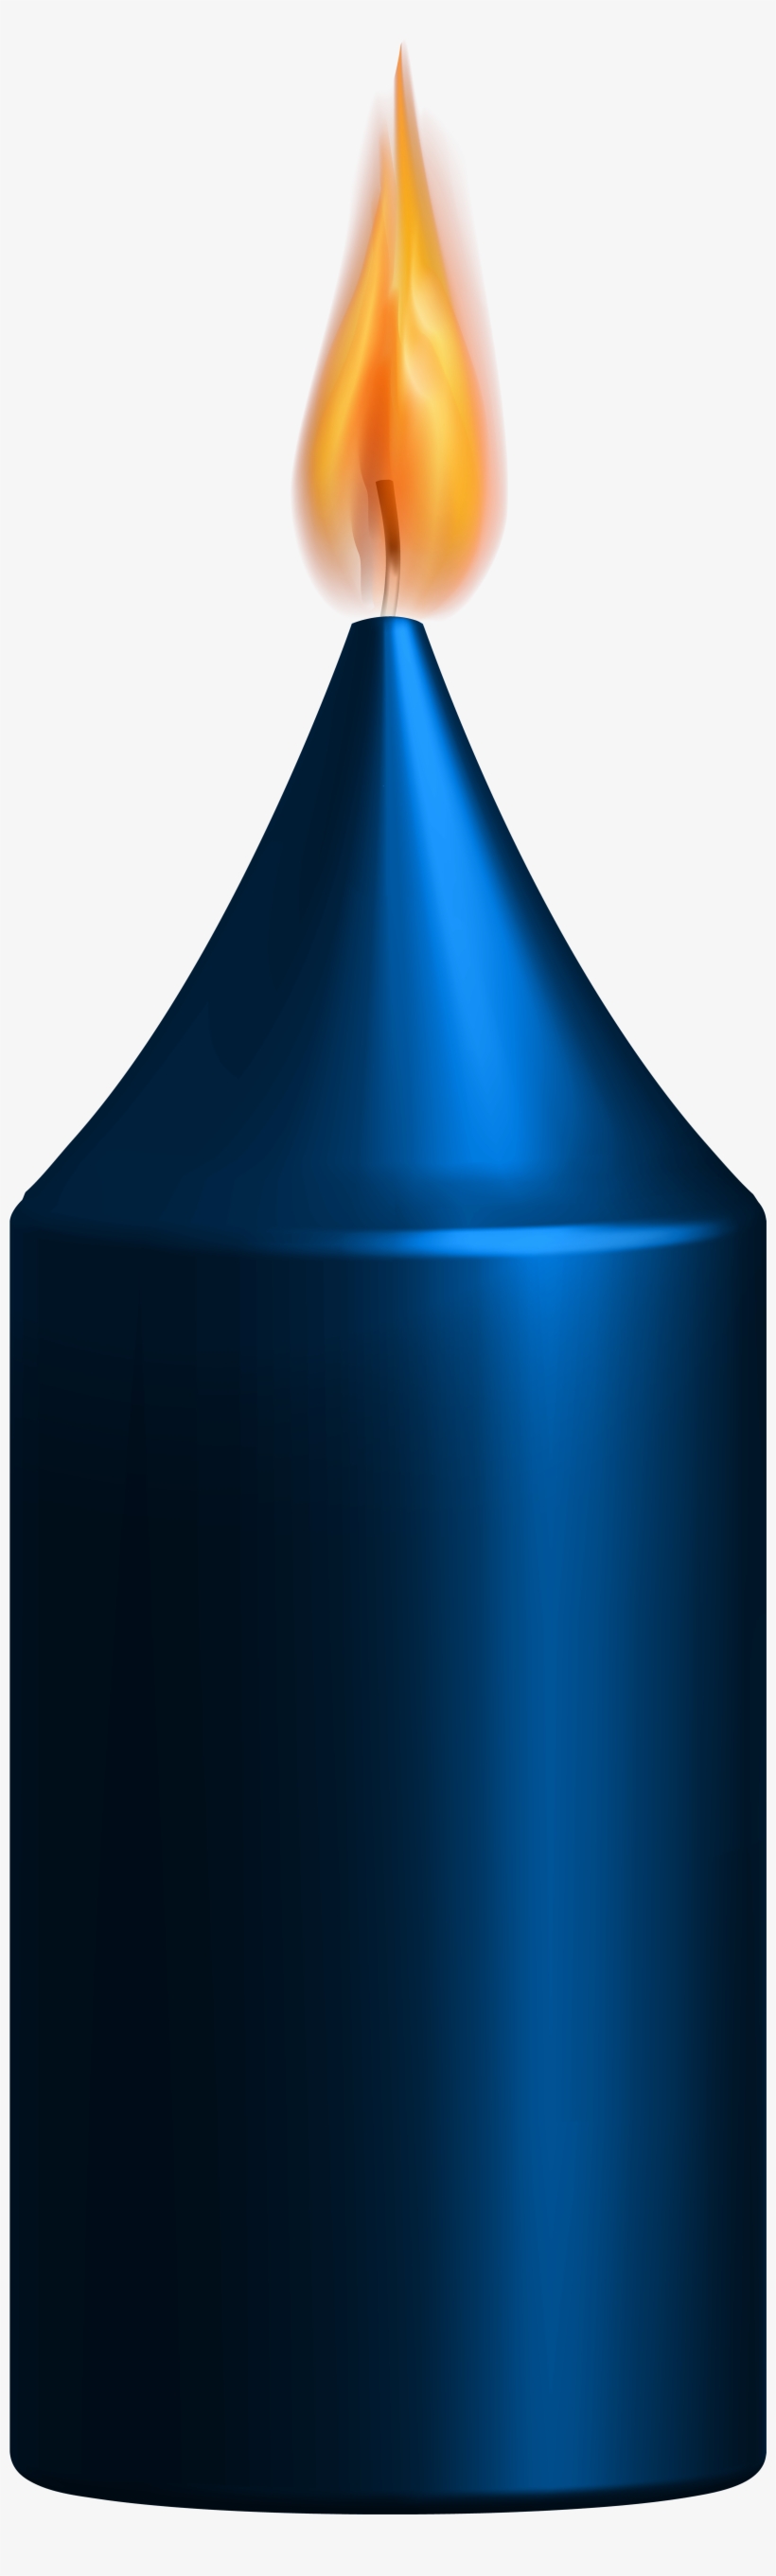 Blue Candle Png Clip Art - Vase, transparent png #2954459